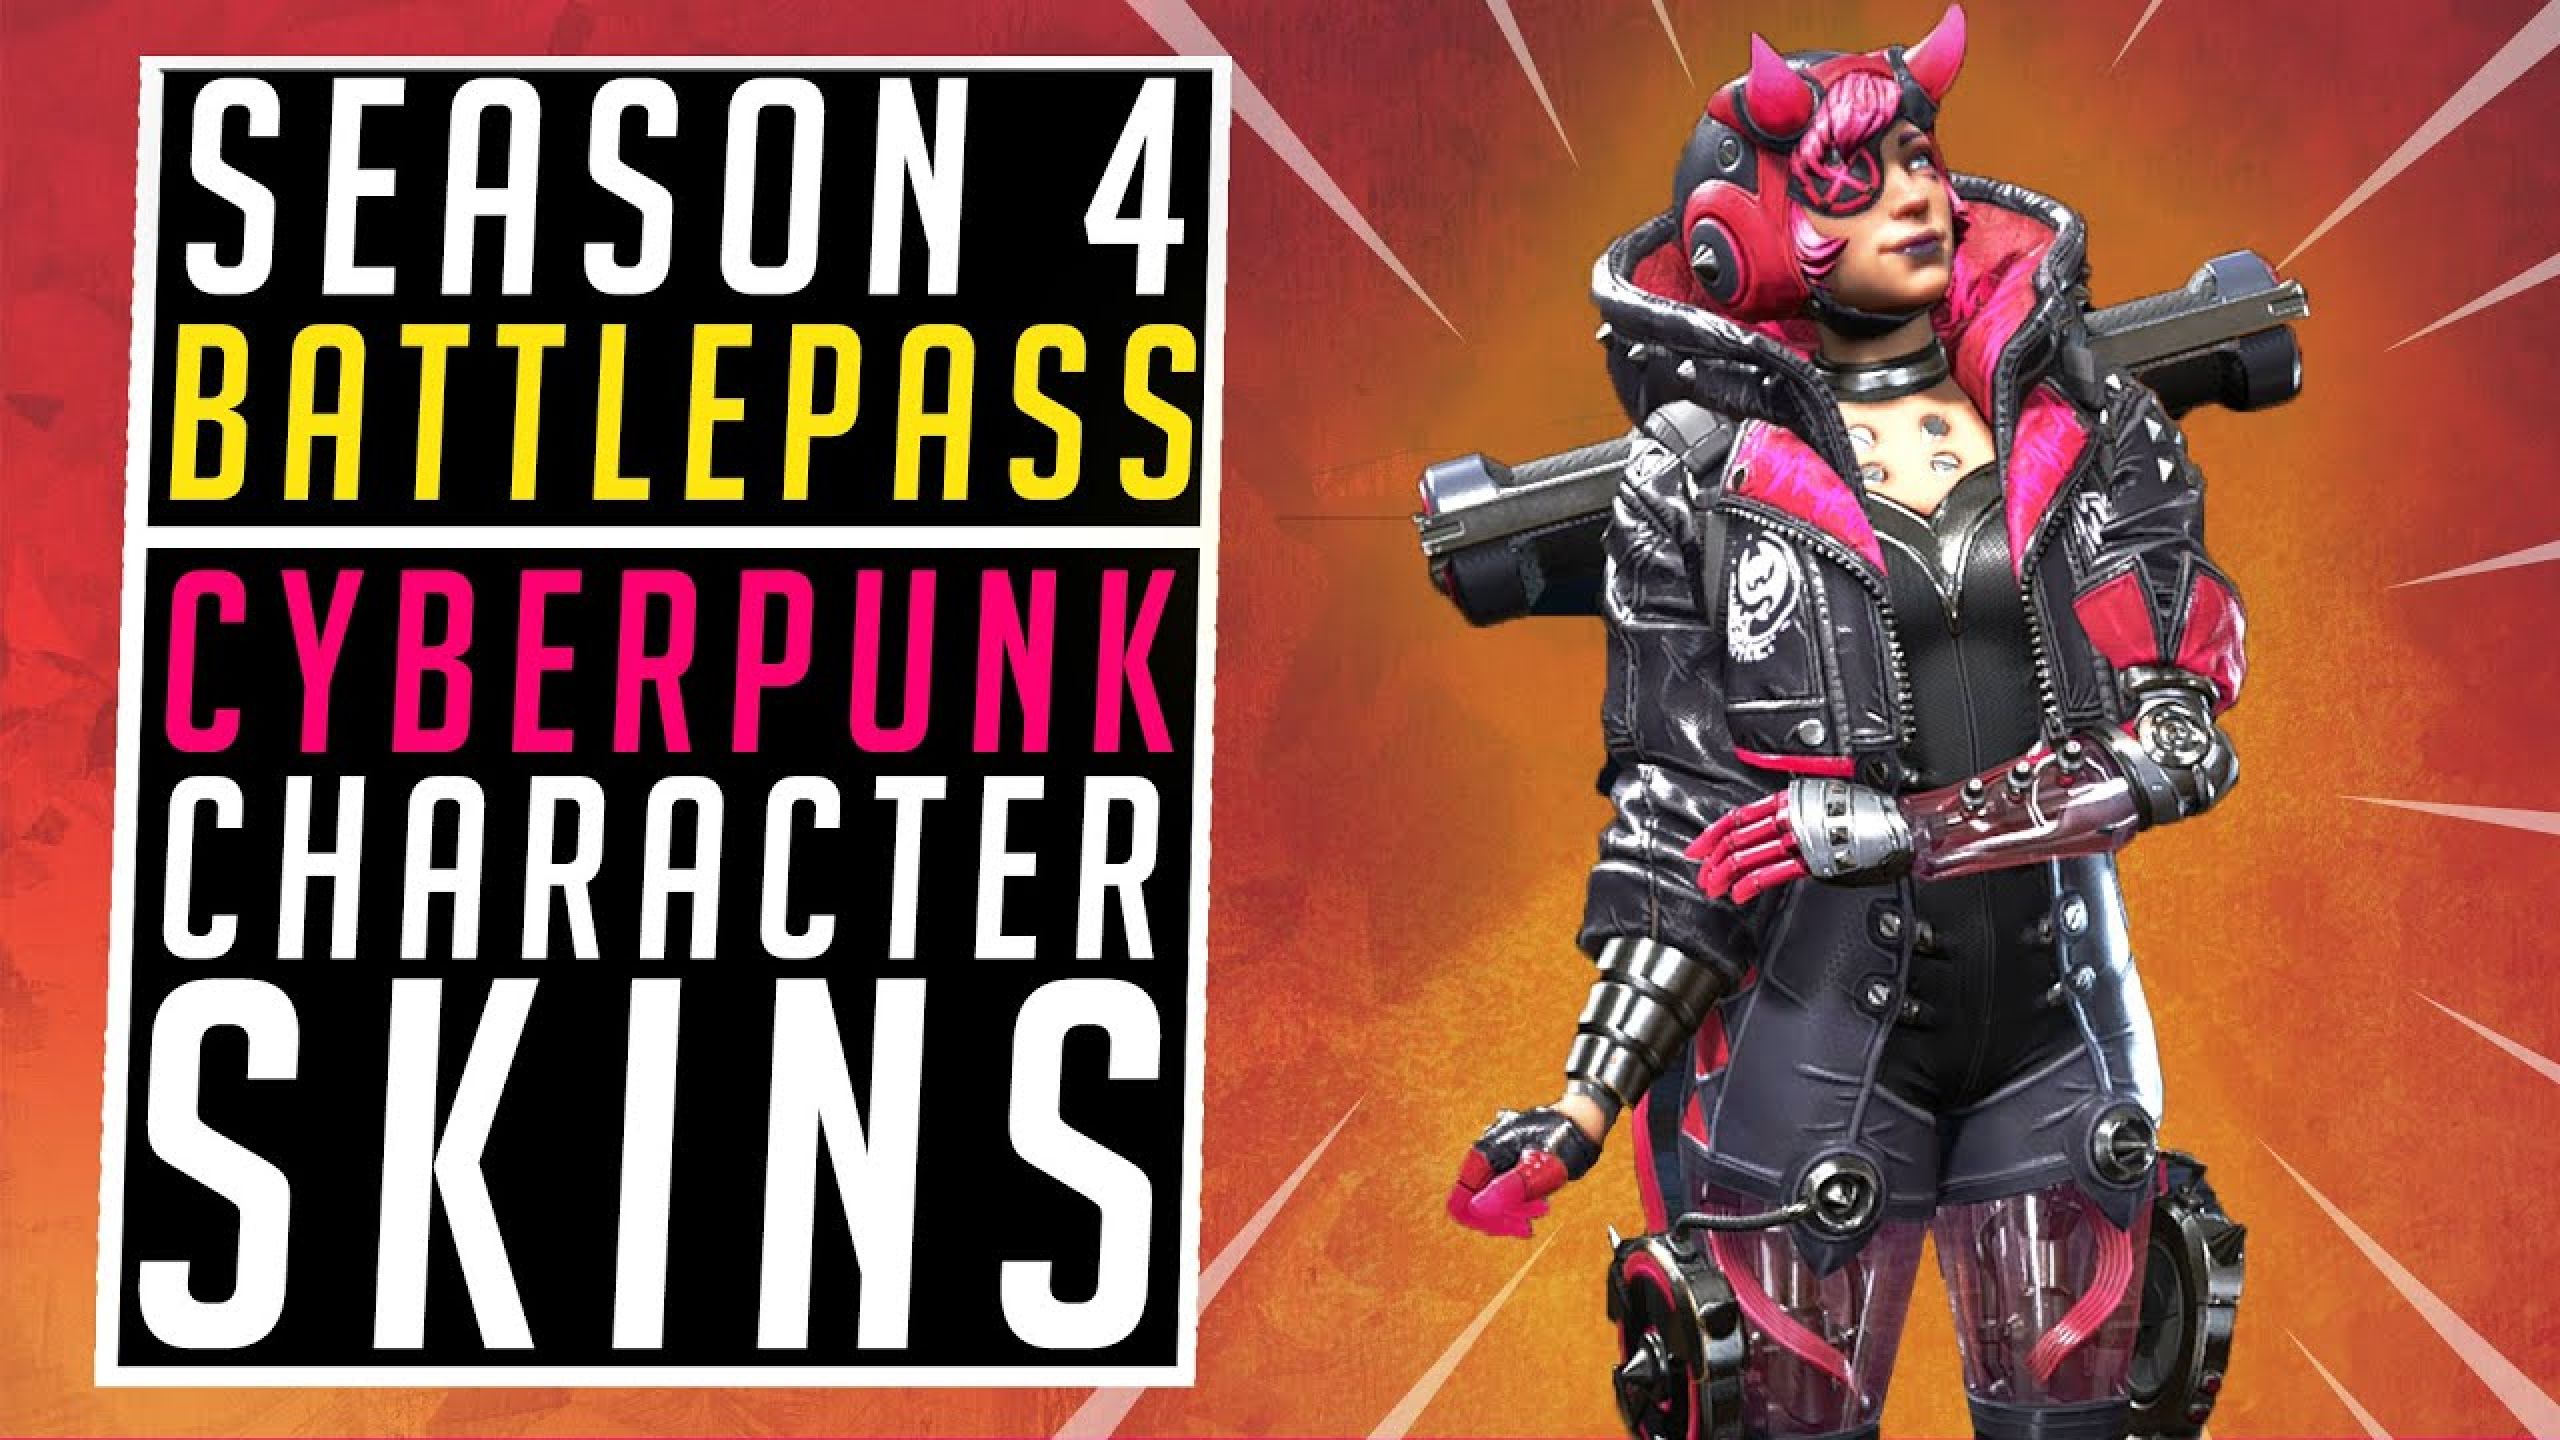 The wig rose Wattson in Apex Legends Season 4 Cyberpunk Character Skins.